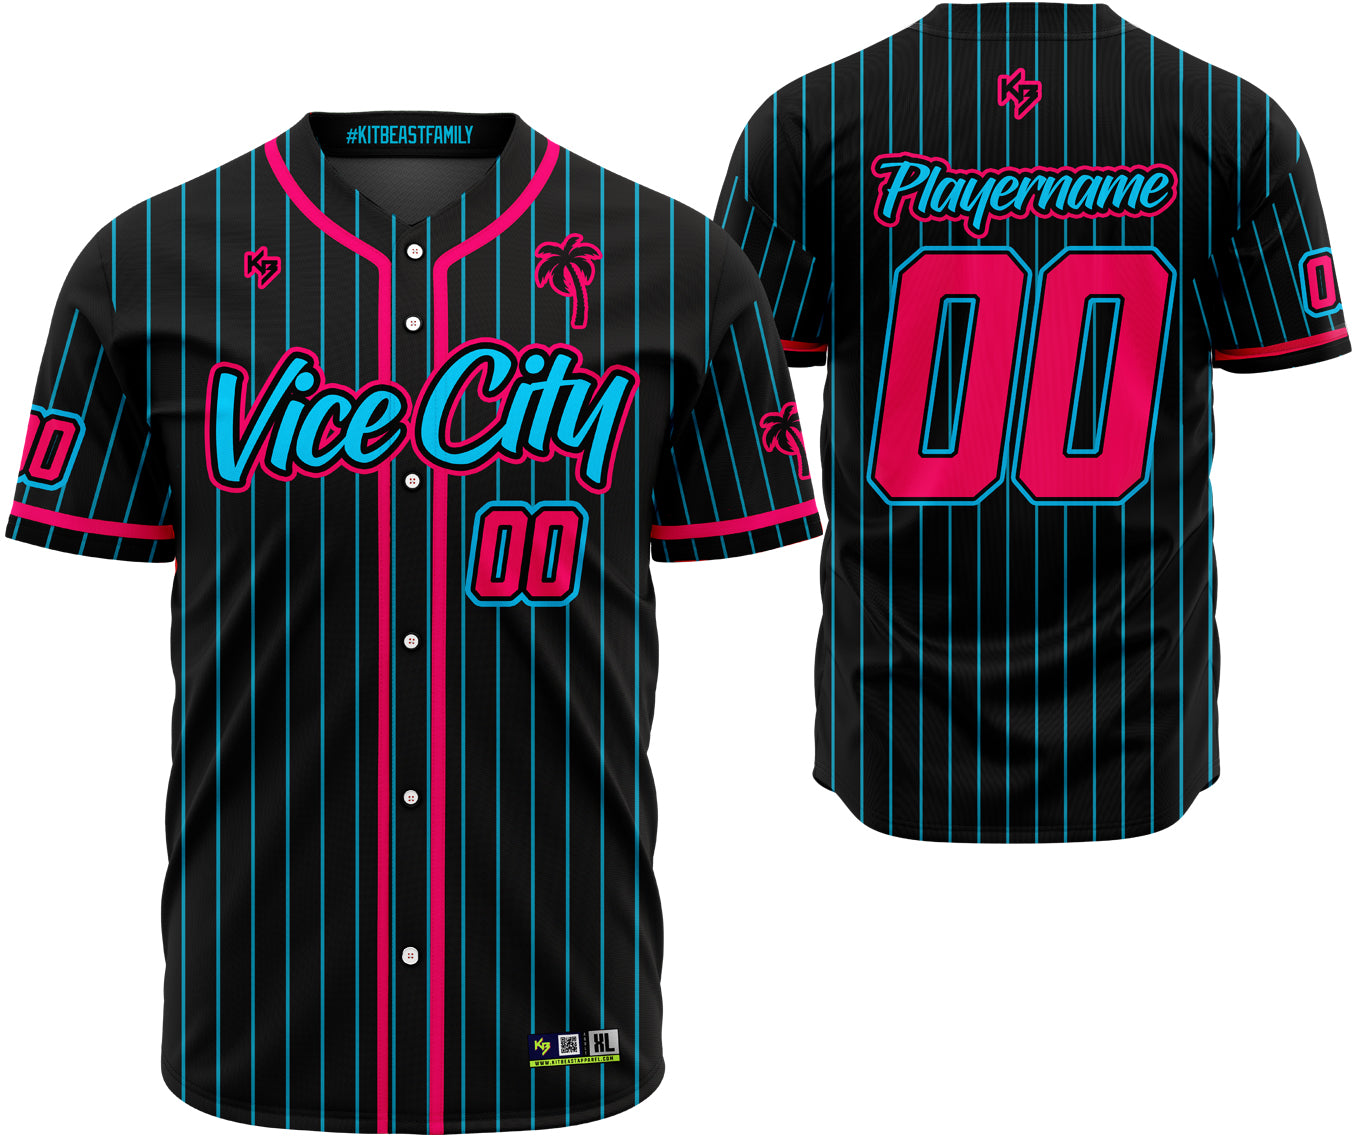 vice city jersey